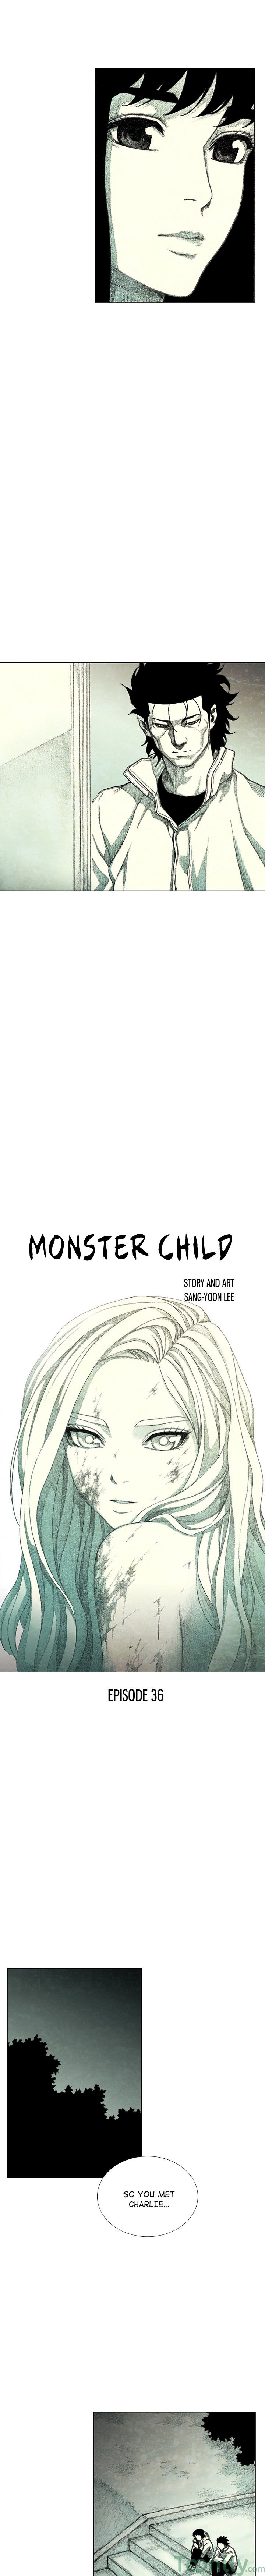 Monster Child image